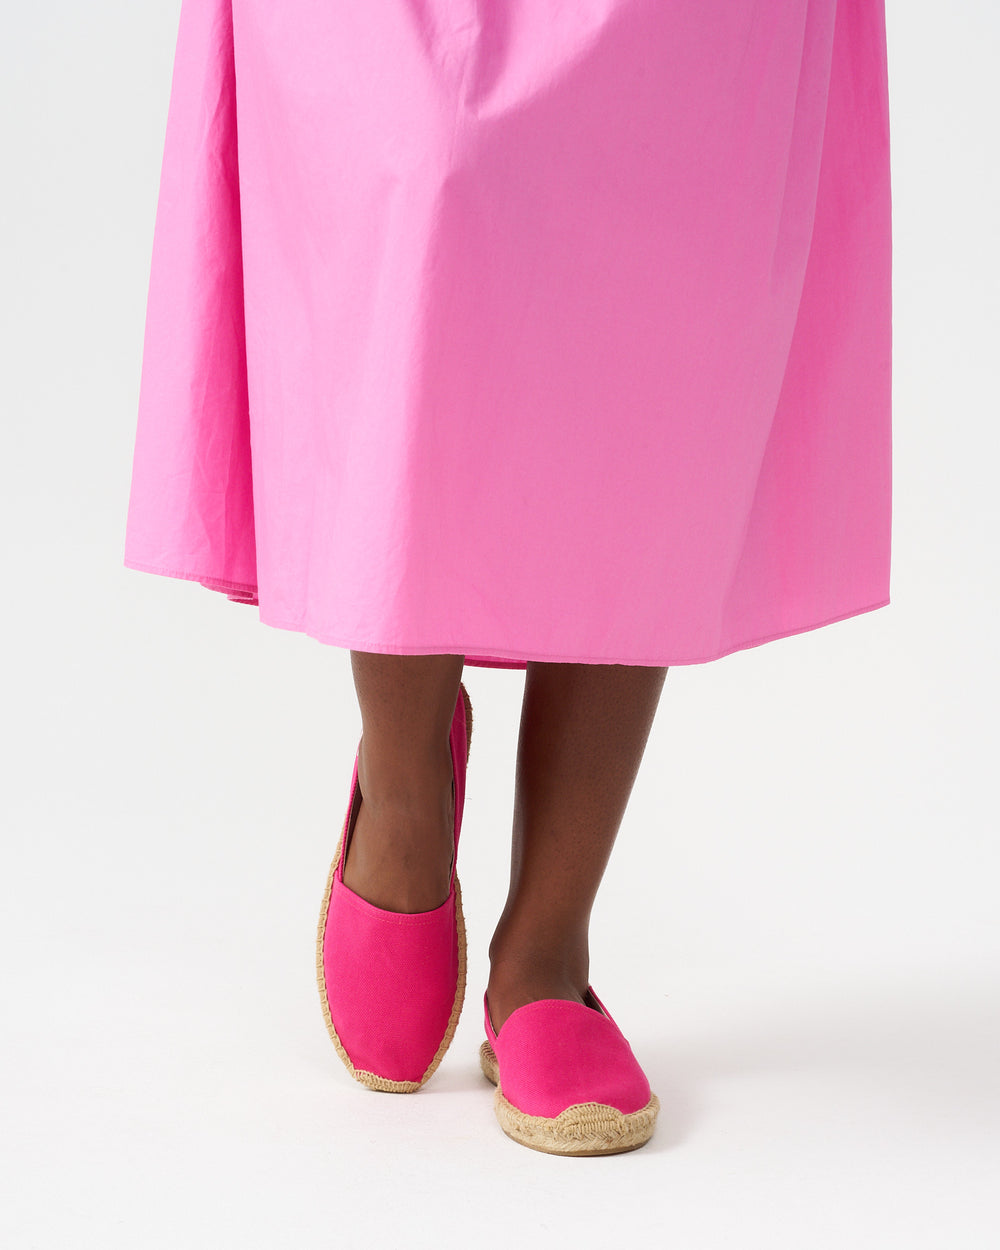 The Original Espadrille - Dali Colors - Seasonal - Calypso Pink - Women's